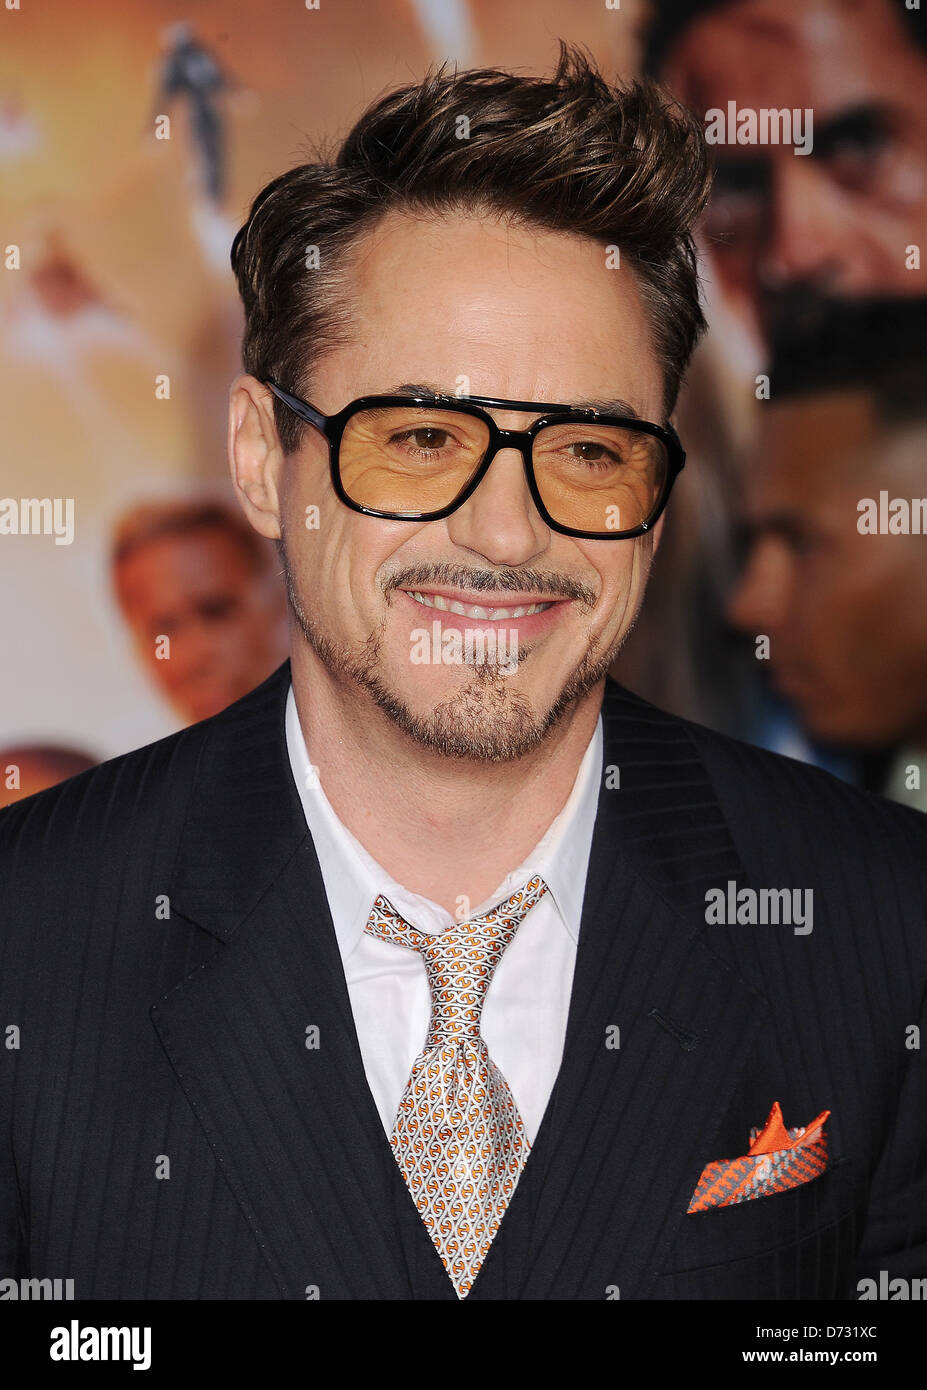 BOBERT DOWNEY Jr. U.S. Filmschauspieler bei LA Premiere von Iron Man 3 im April 2013. Foto Jeffrey Mayer Stockfoto